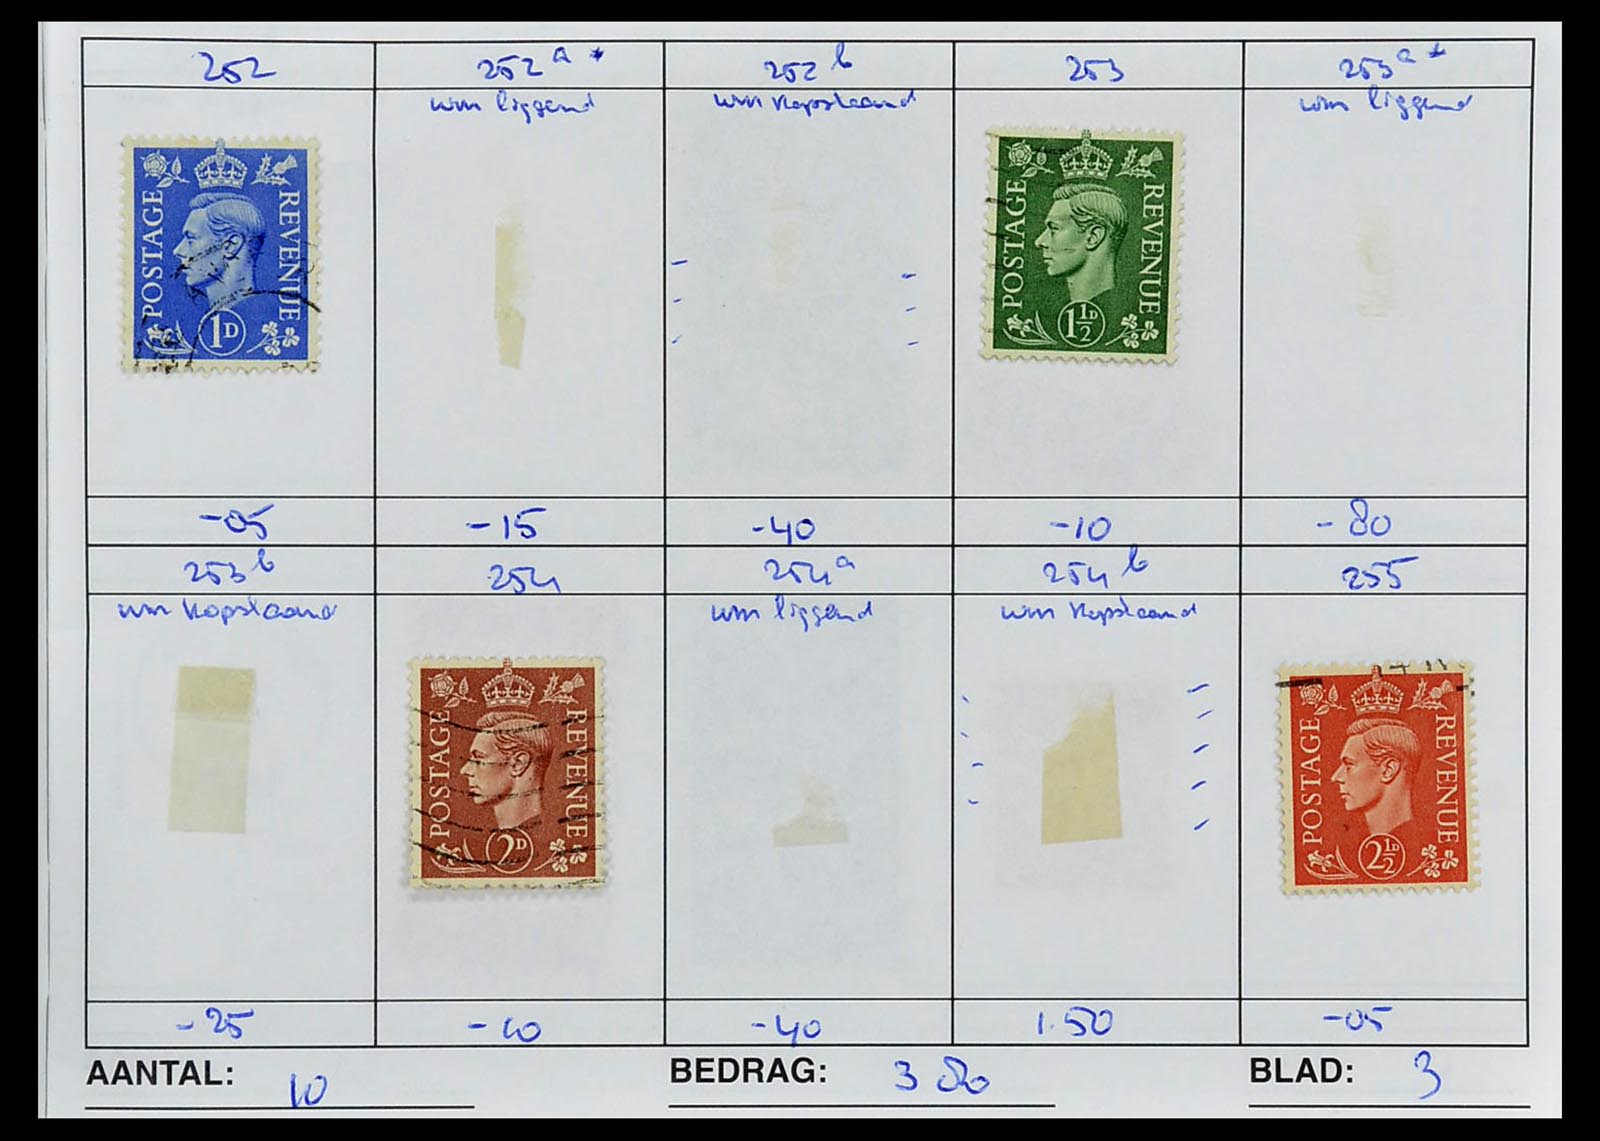 34612 0046 - Stamp Collection 34612 Wereld rondzendboekjes.